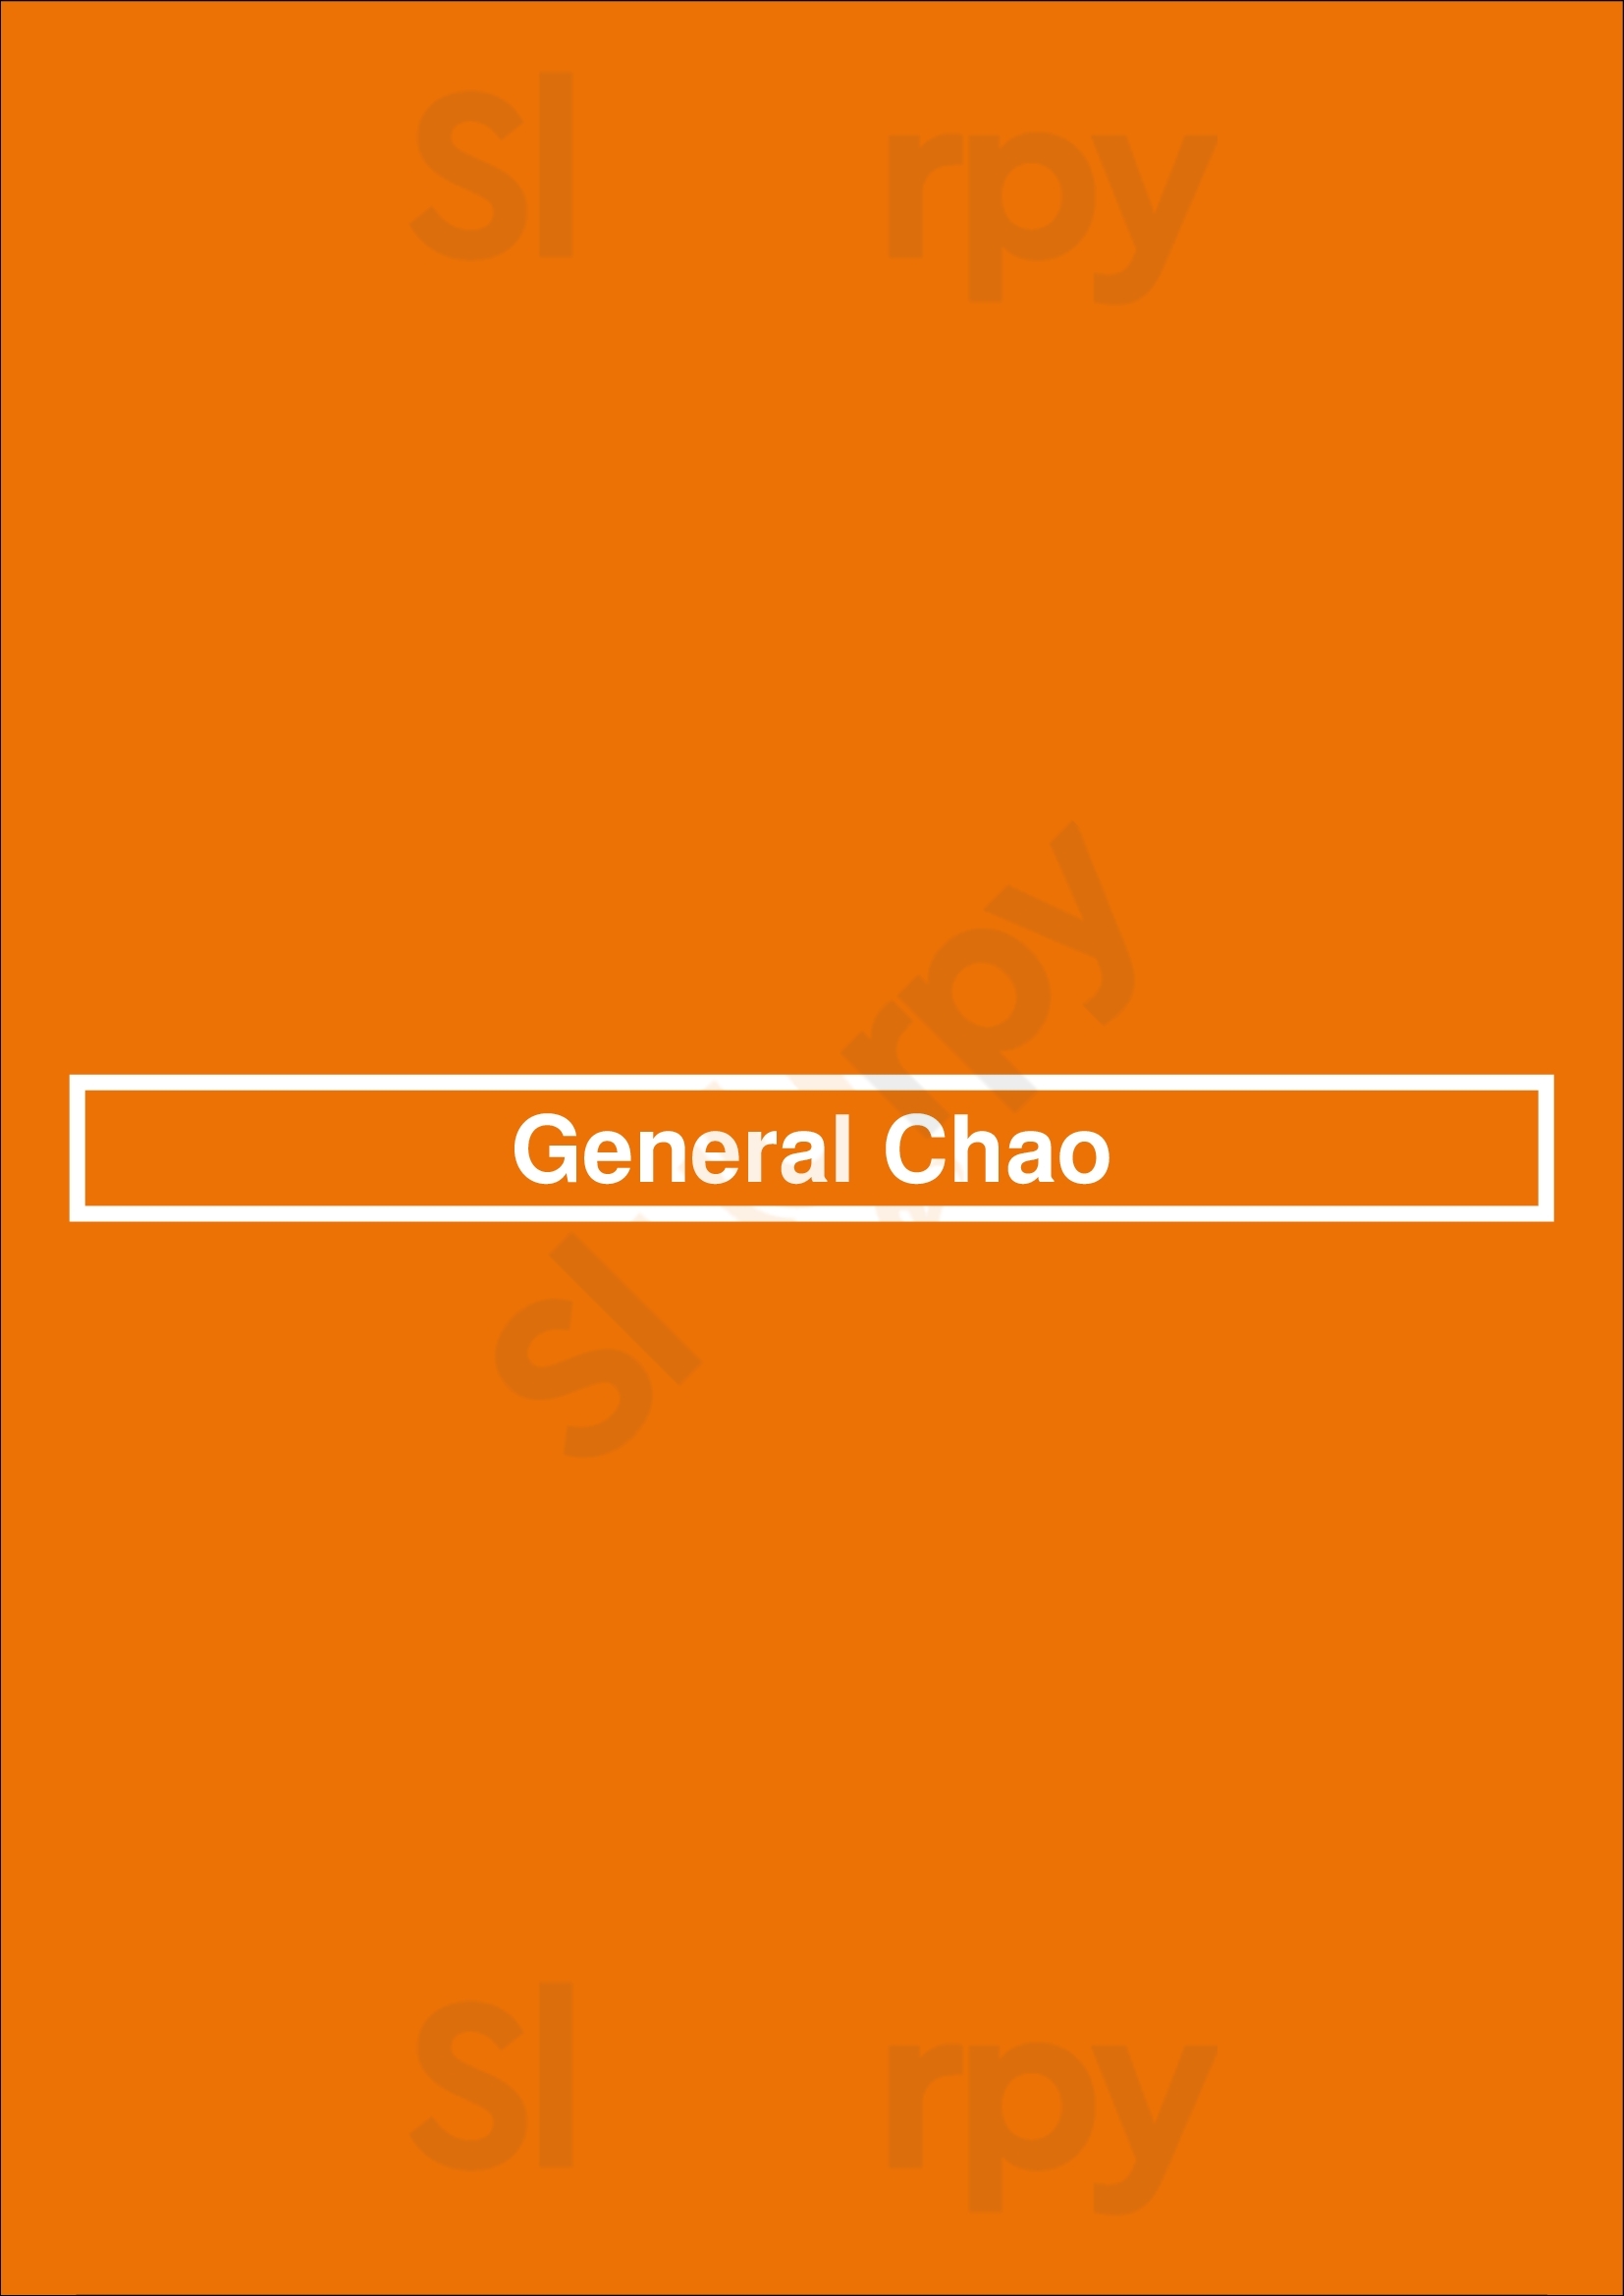 General Chao Chatswood Menu - 1